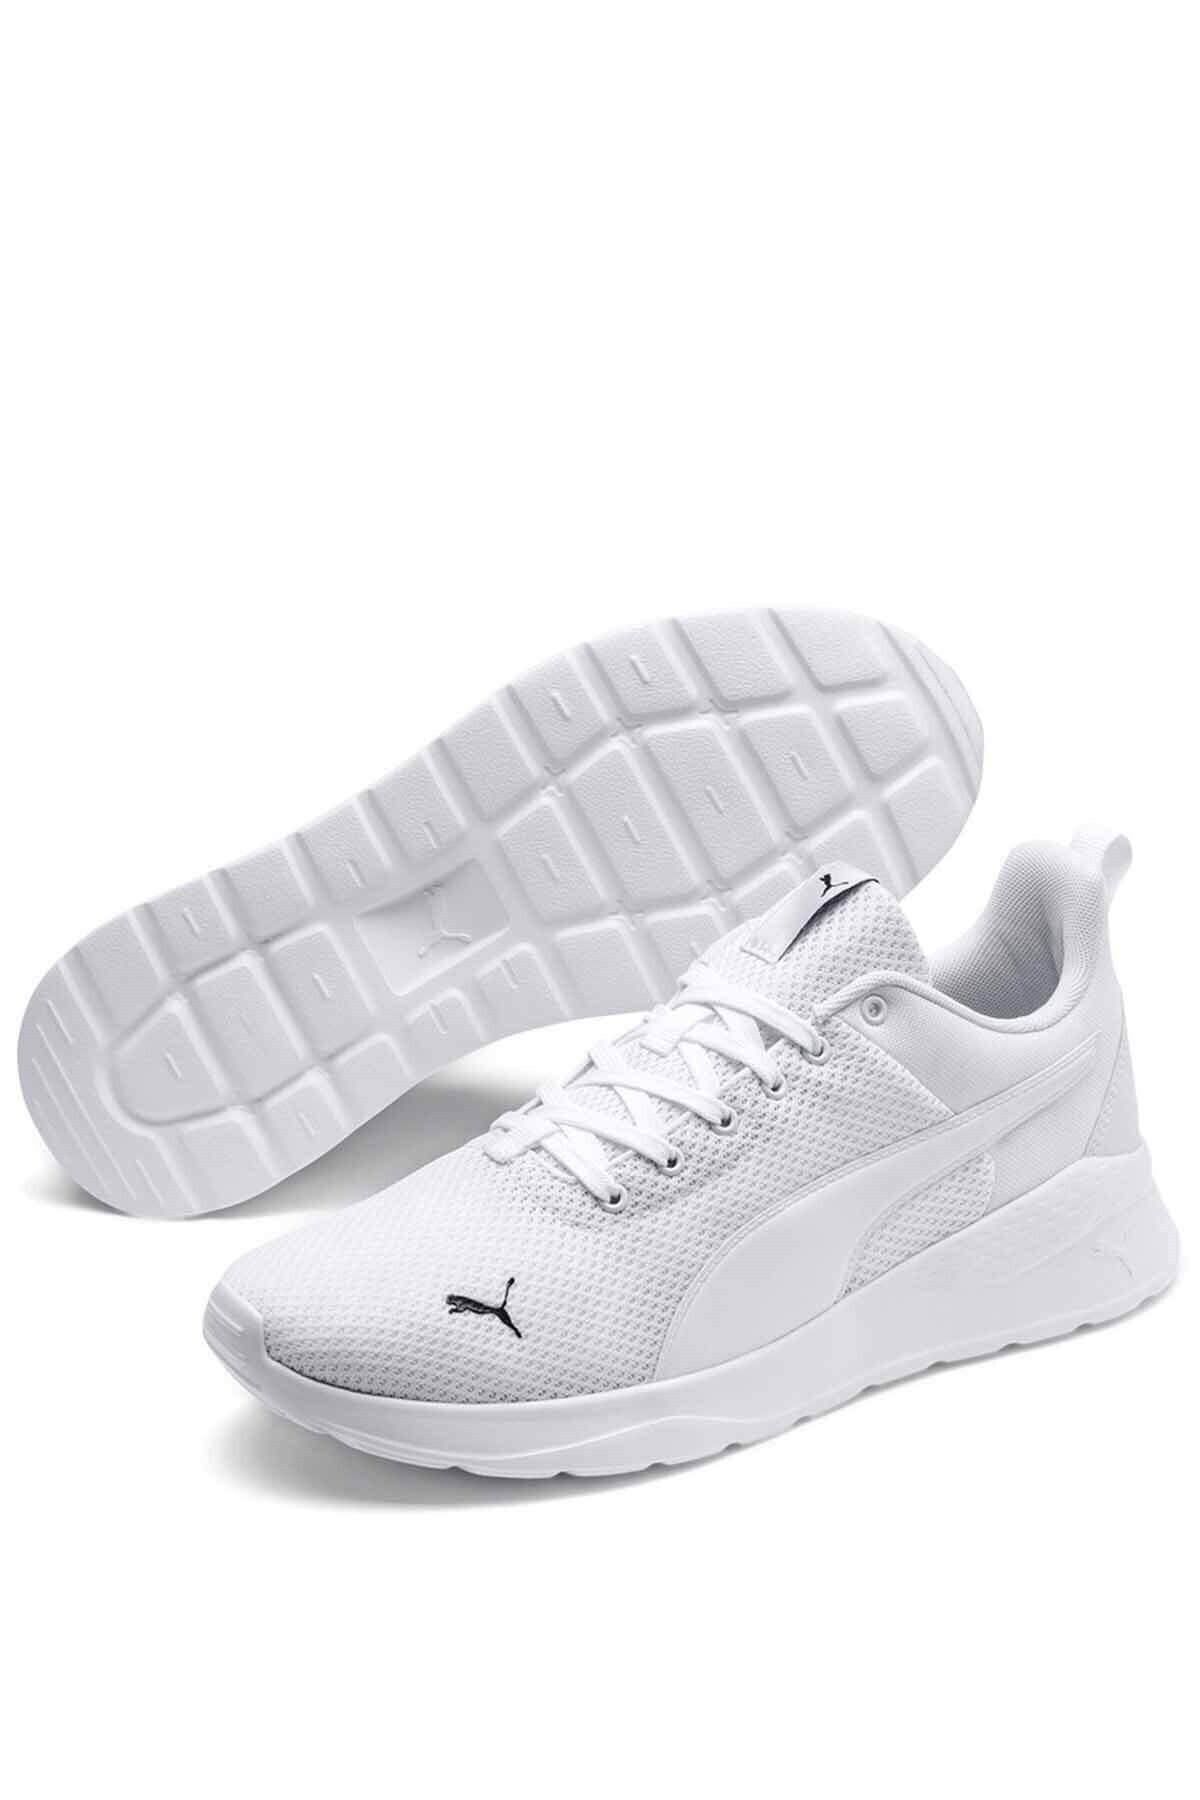 Puma Anzarun Lite Unisex Daily Sports Shoes 37112803 White - Trendyol